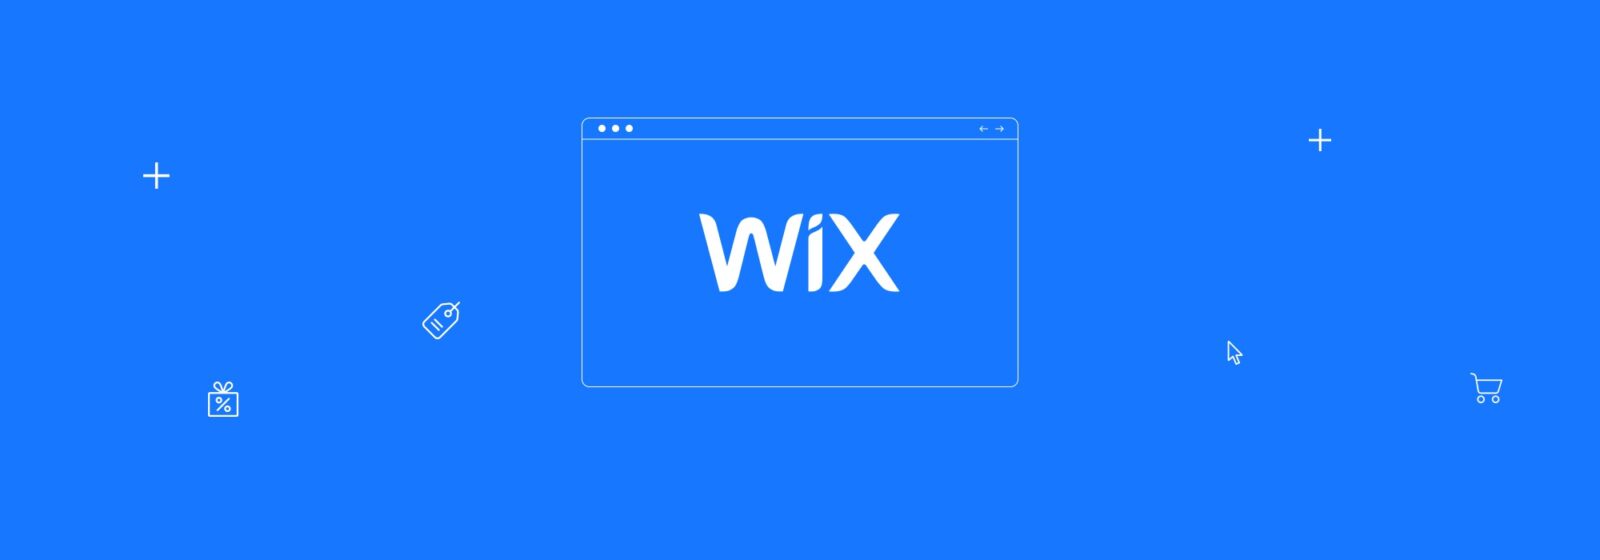 Продвижение сайтов на платформе WIX